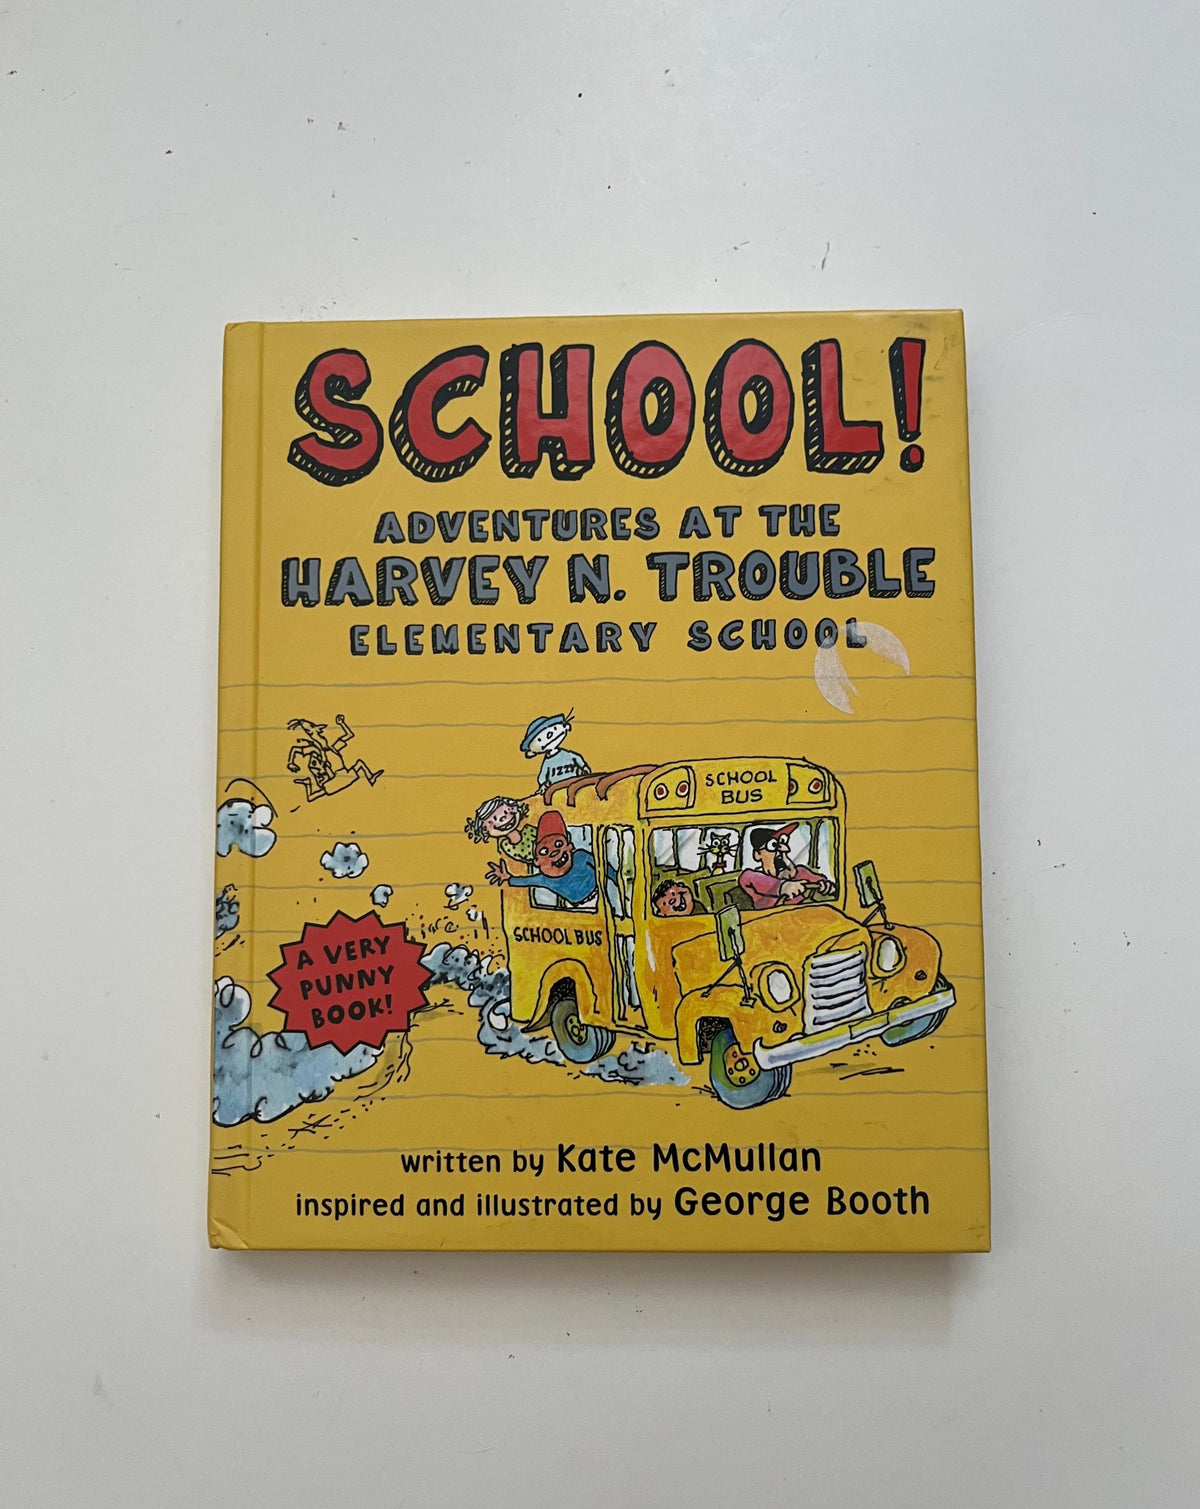 School: Adventures at the Harvey N. Trouble Elementary School by Kate McMullan